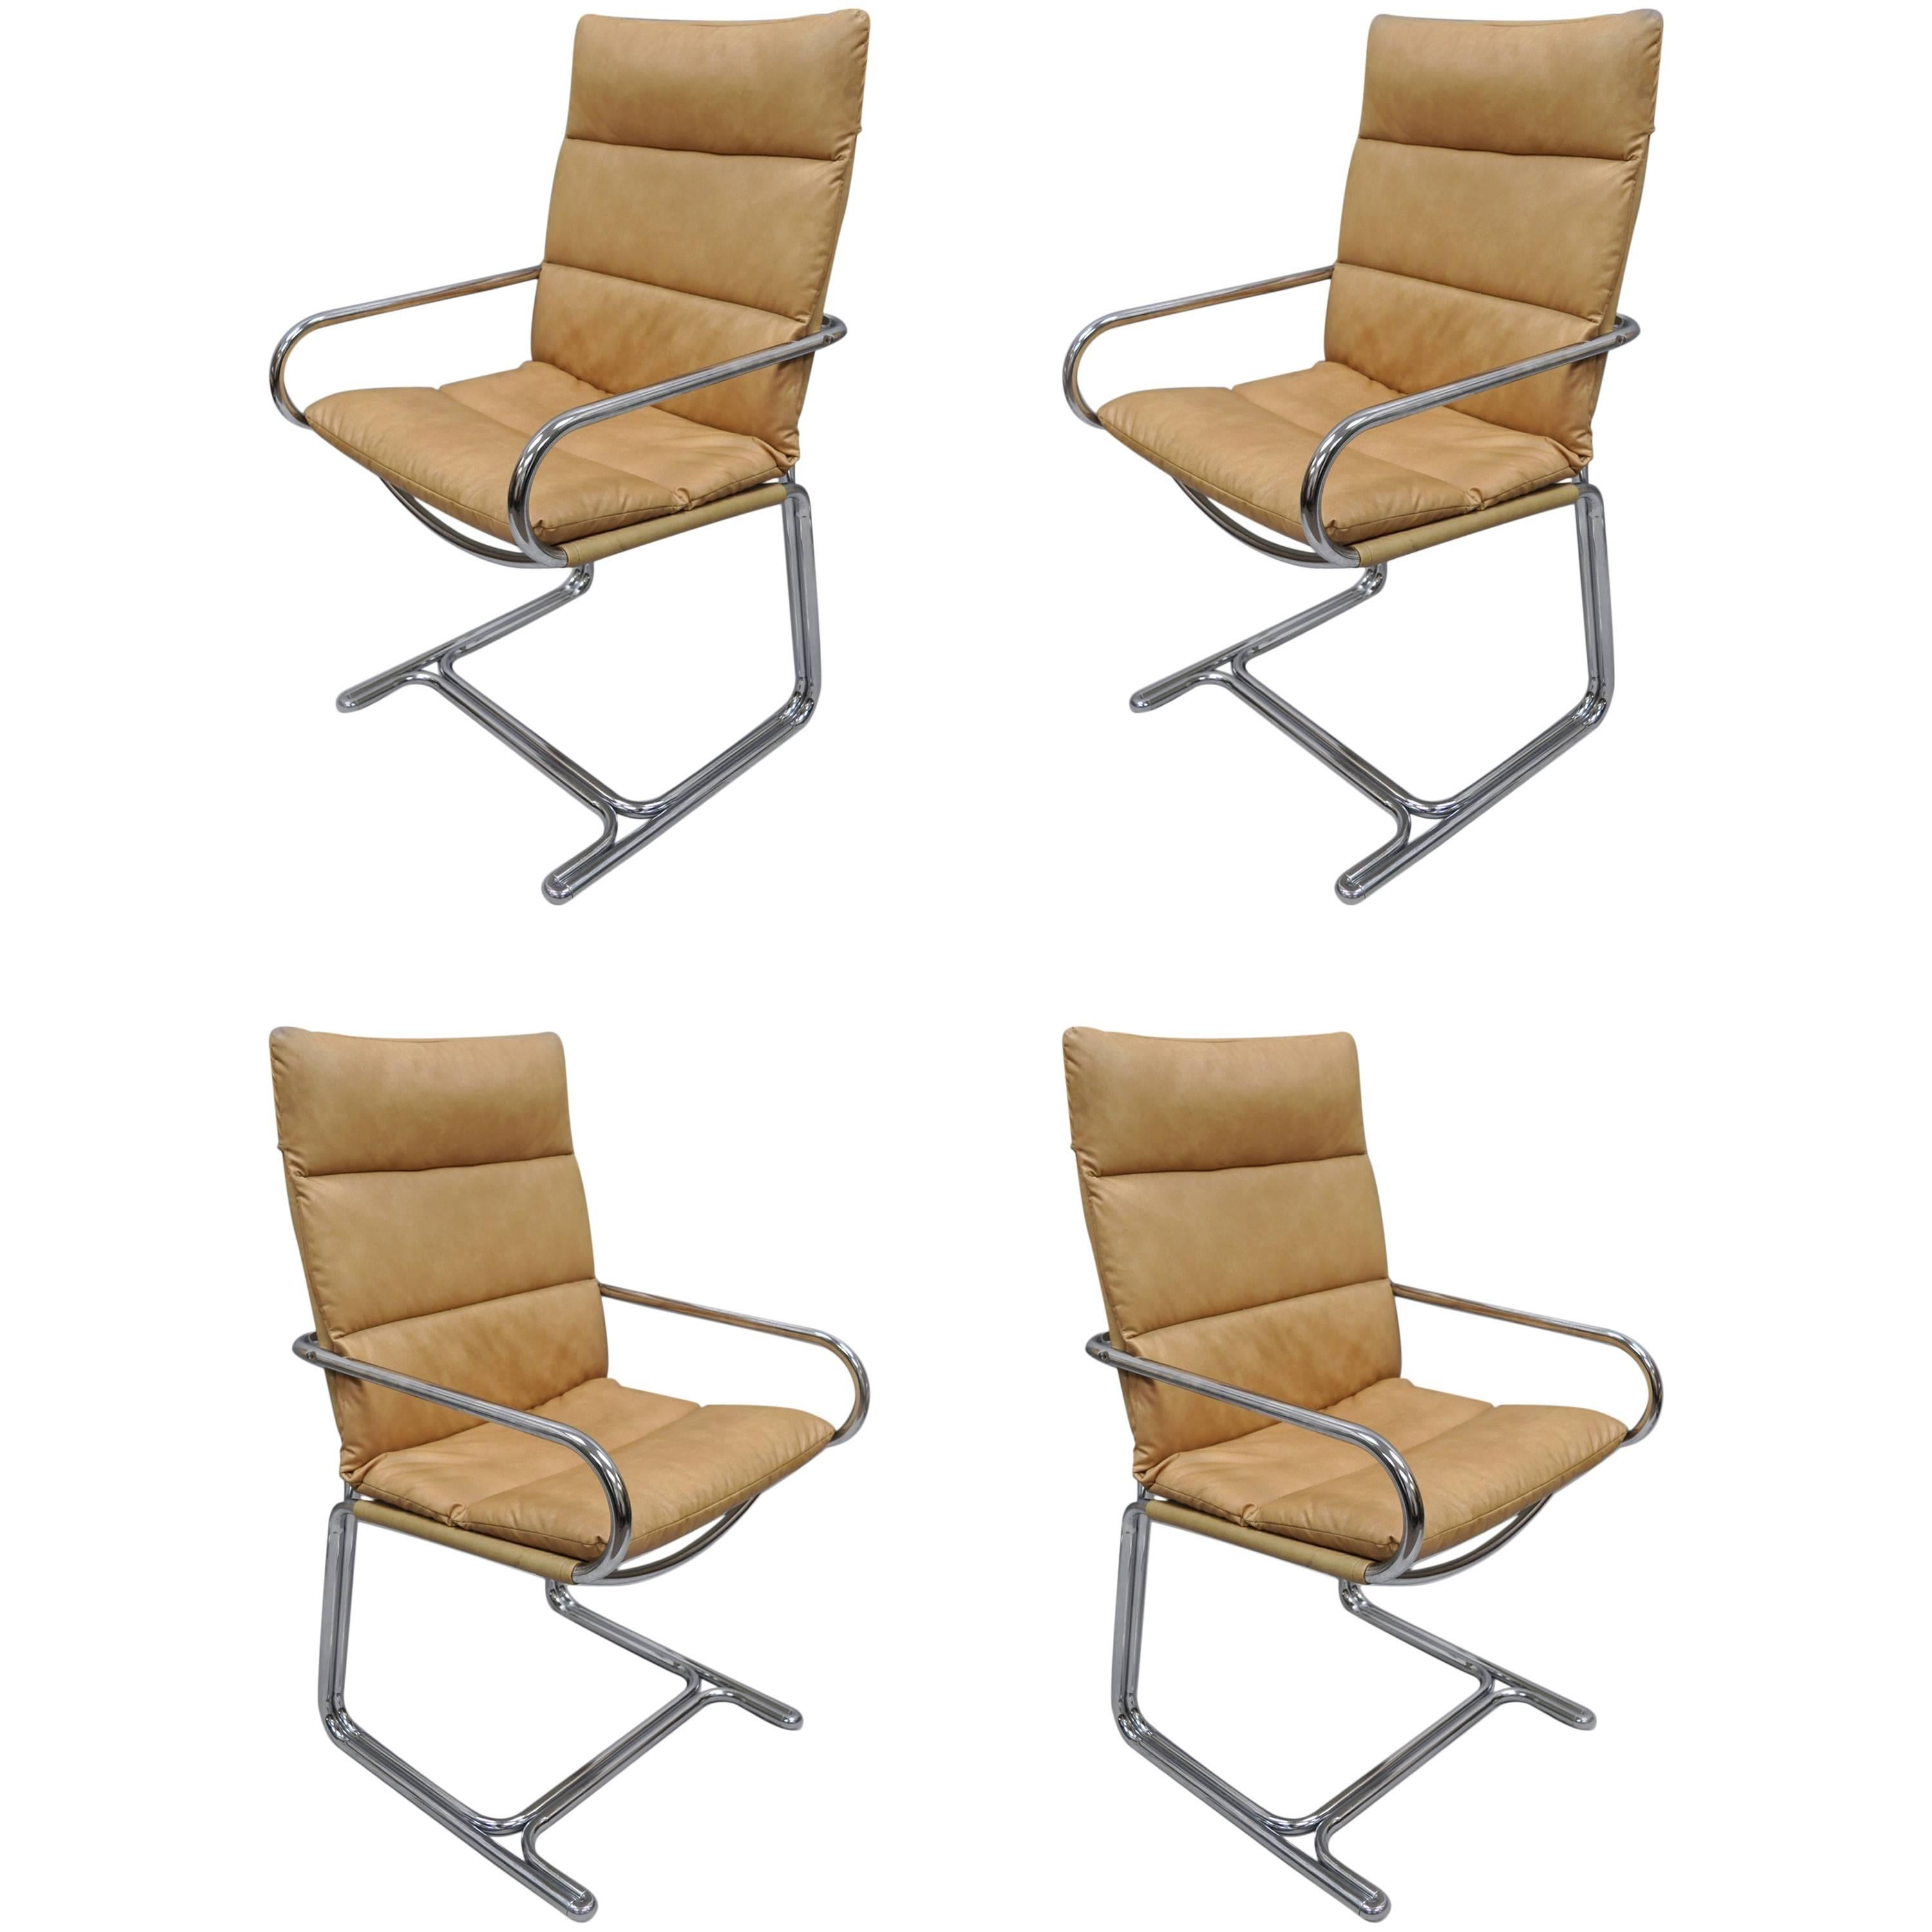 Four Tubular Chrome Cantilever Style Arm Chairs by Cosco Inc after Milo Baughman